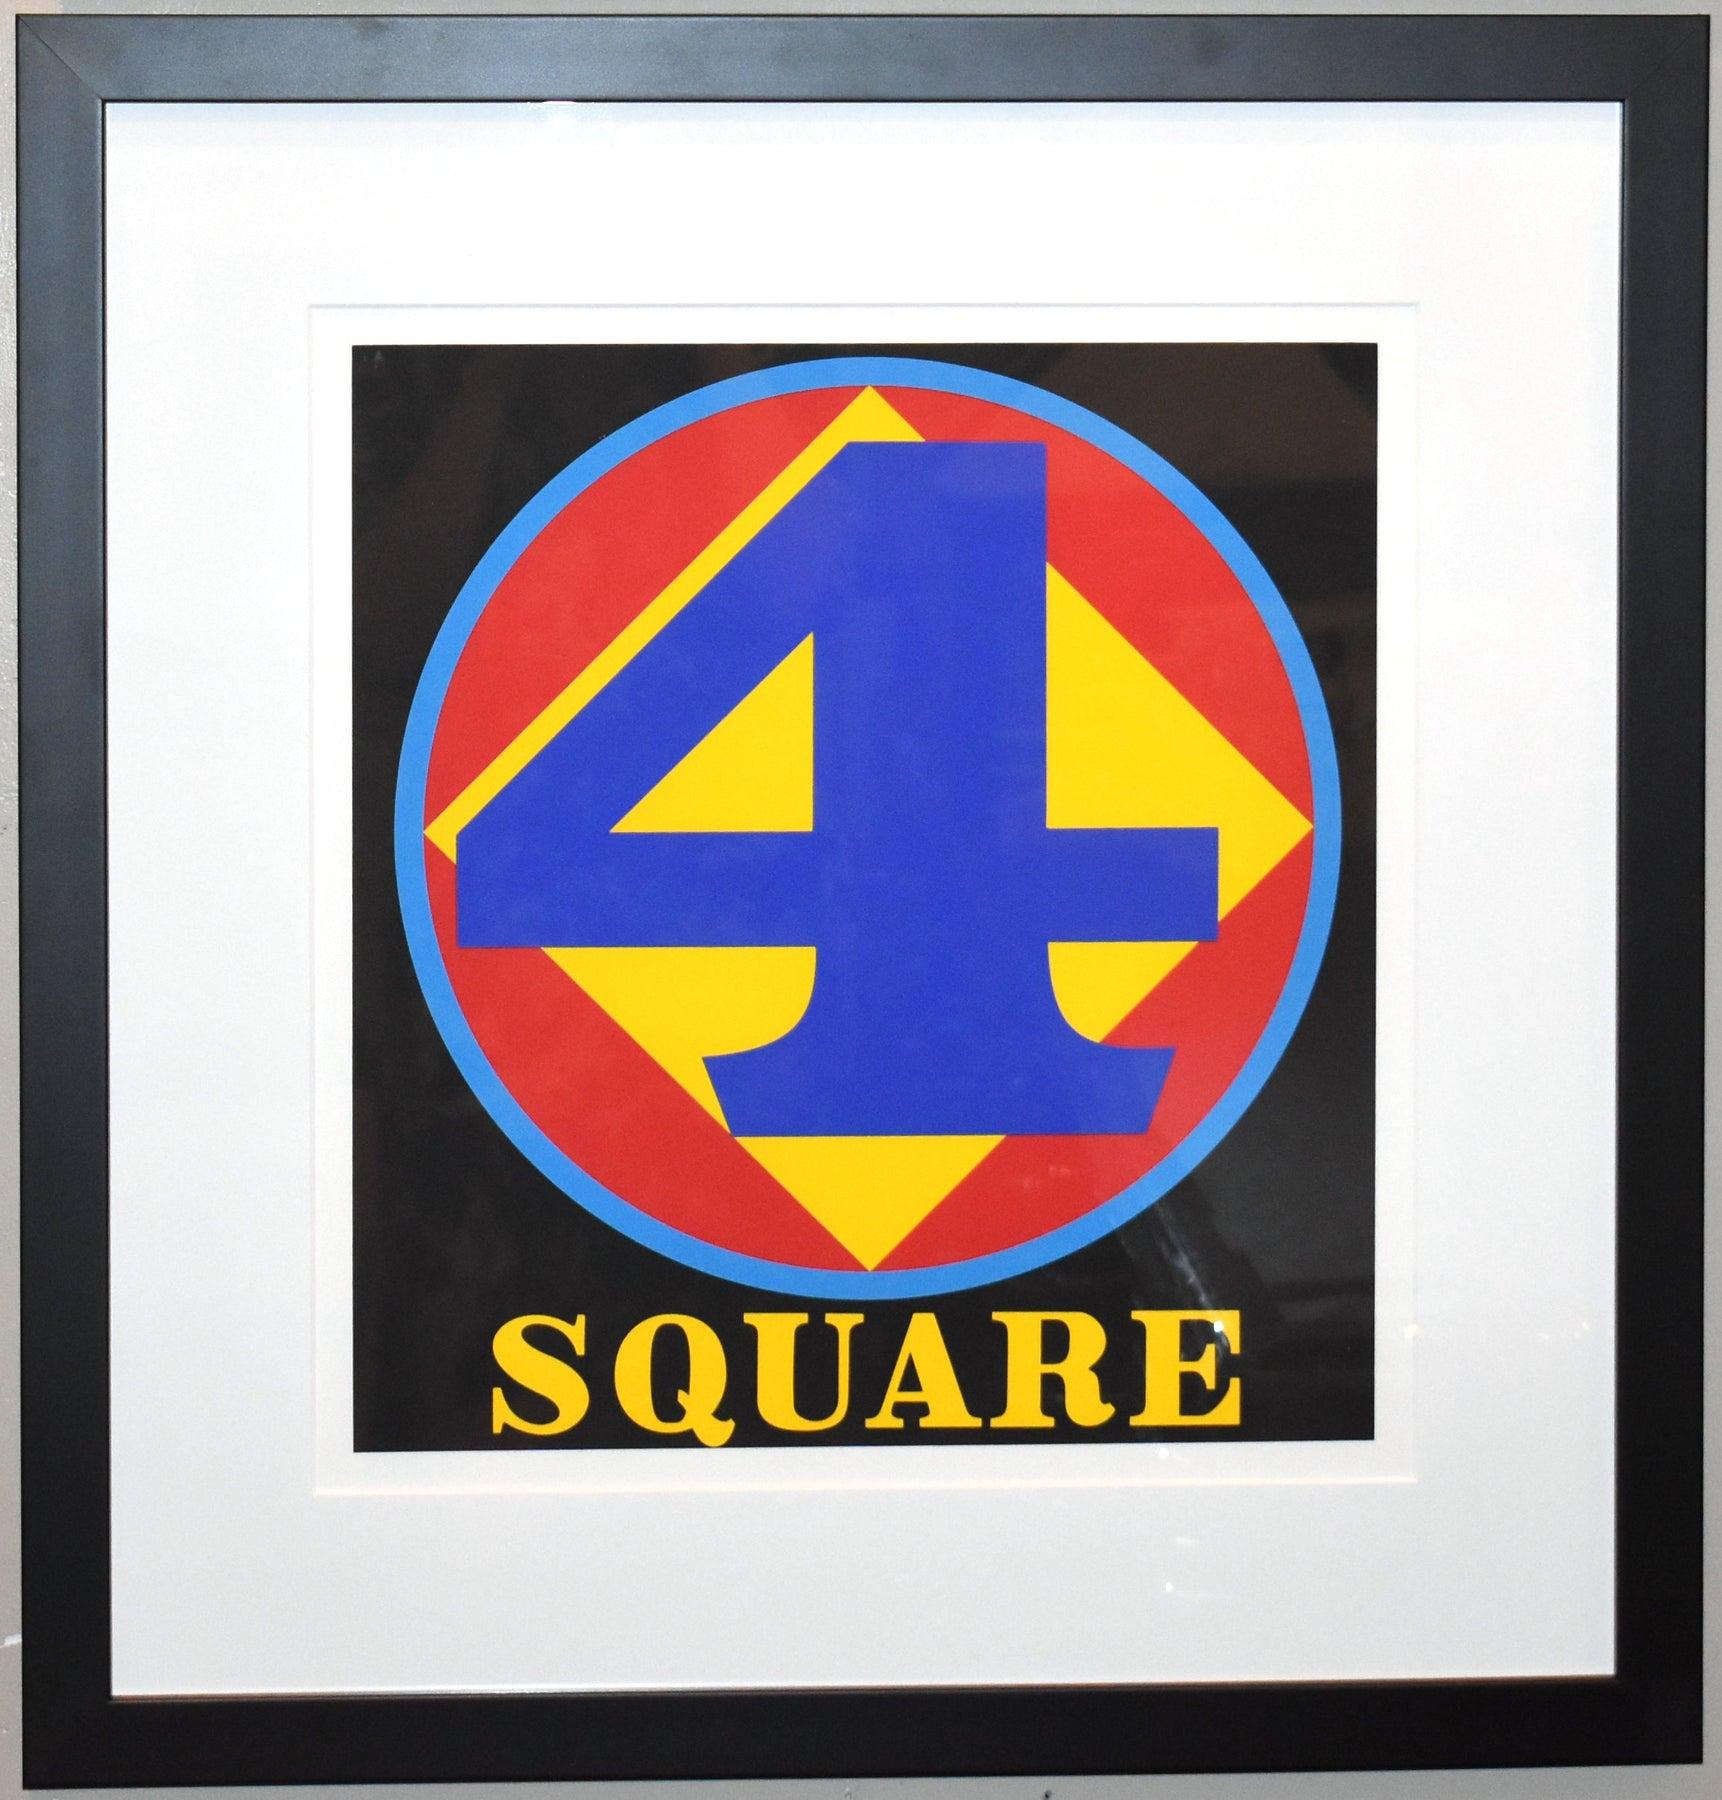 Artist: Robert Indiana
Title: Polygon: Square
Portfolio: The American Dream
Year: 1997
Edition: 76/395
Medium: Original serigraph
Framed Size: 24 1/2